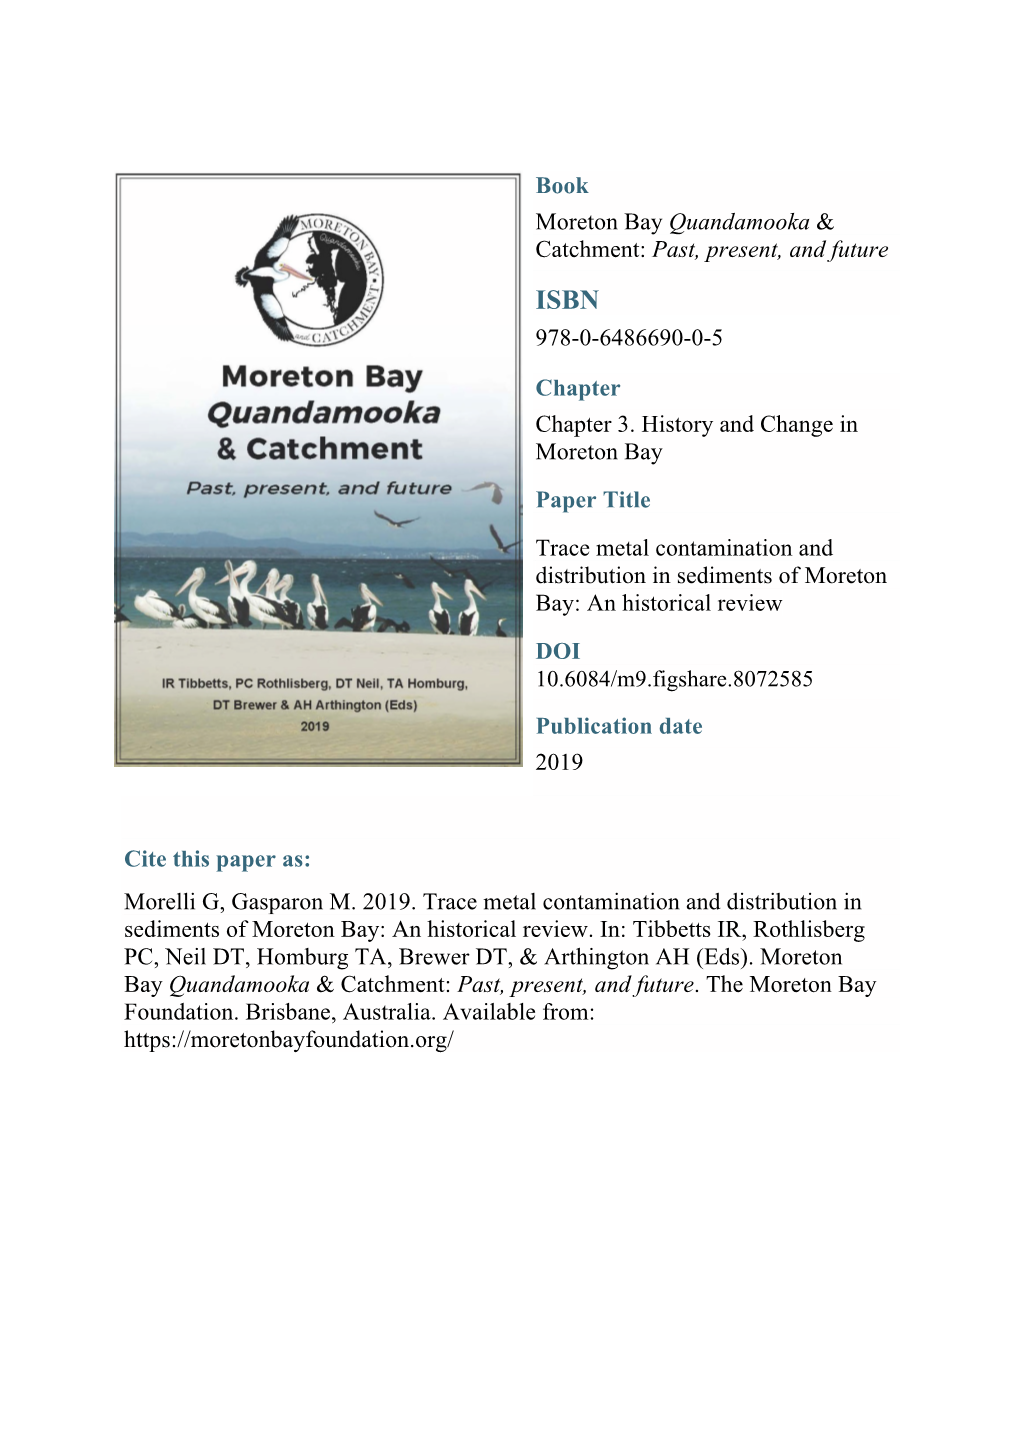 Book Moreton Bay Quandamooka & Catchment